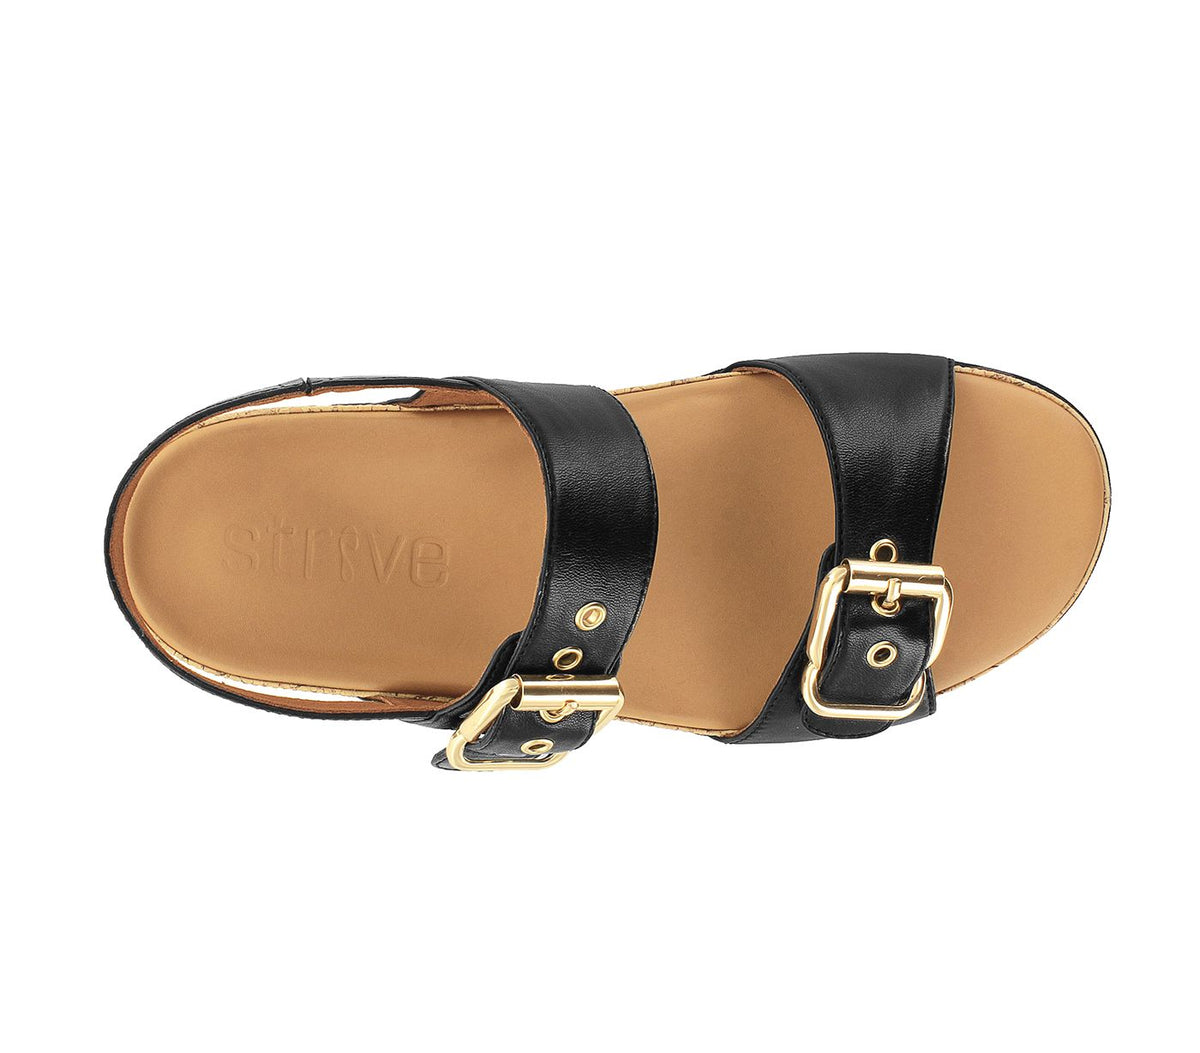 Strive - Amalfi black Gold Buckle Leather Sandal